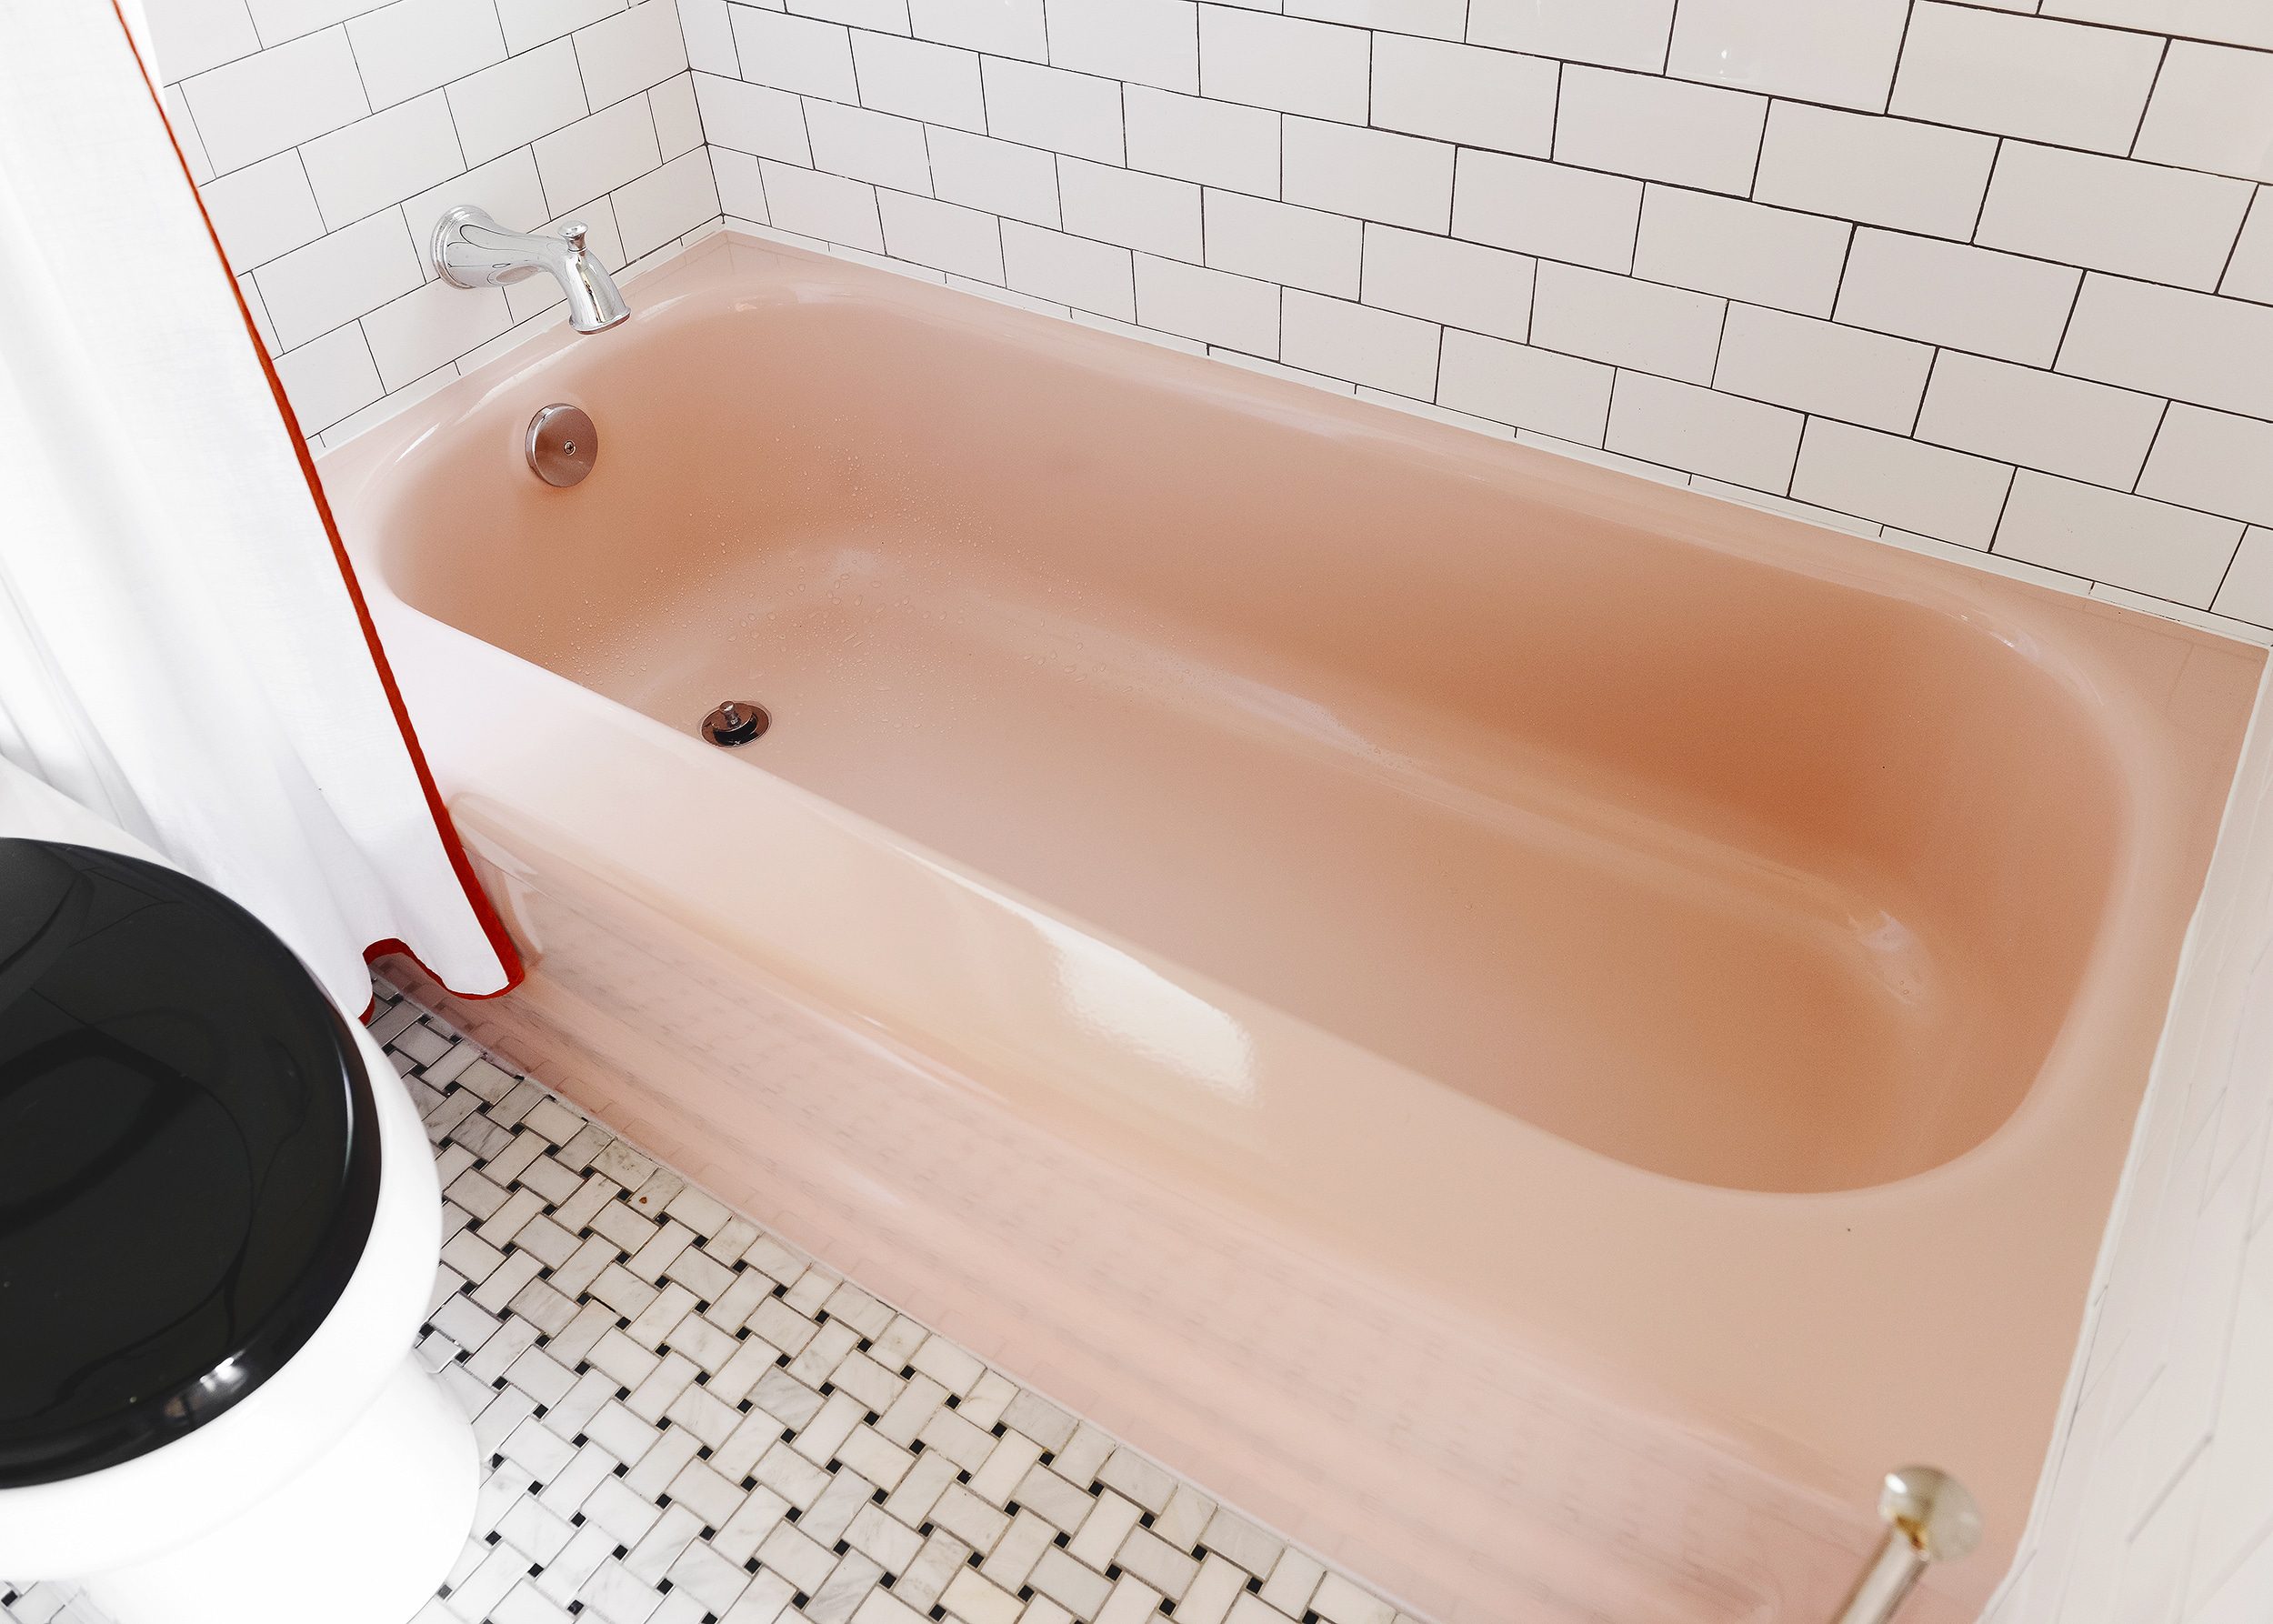 Our freshly reglazed vintage pink bathtub! | via Yellow Brick Home